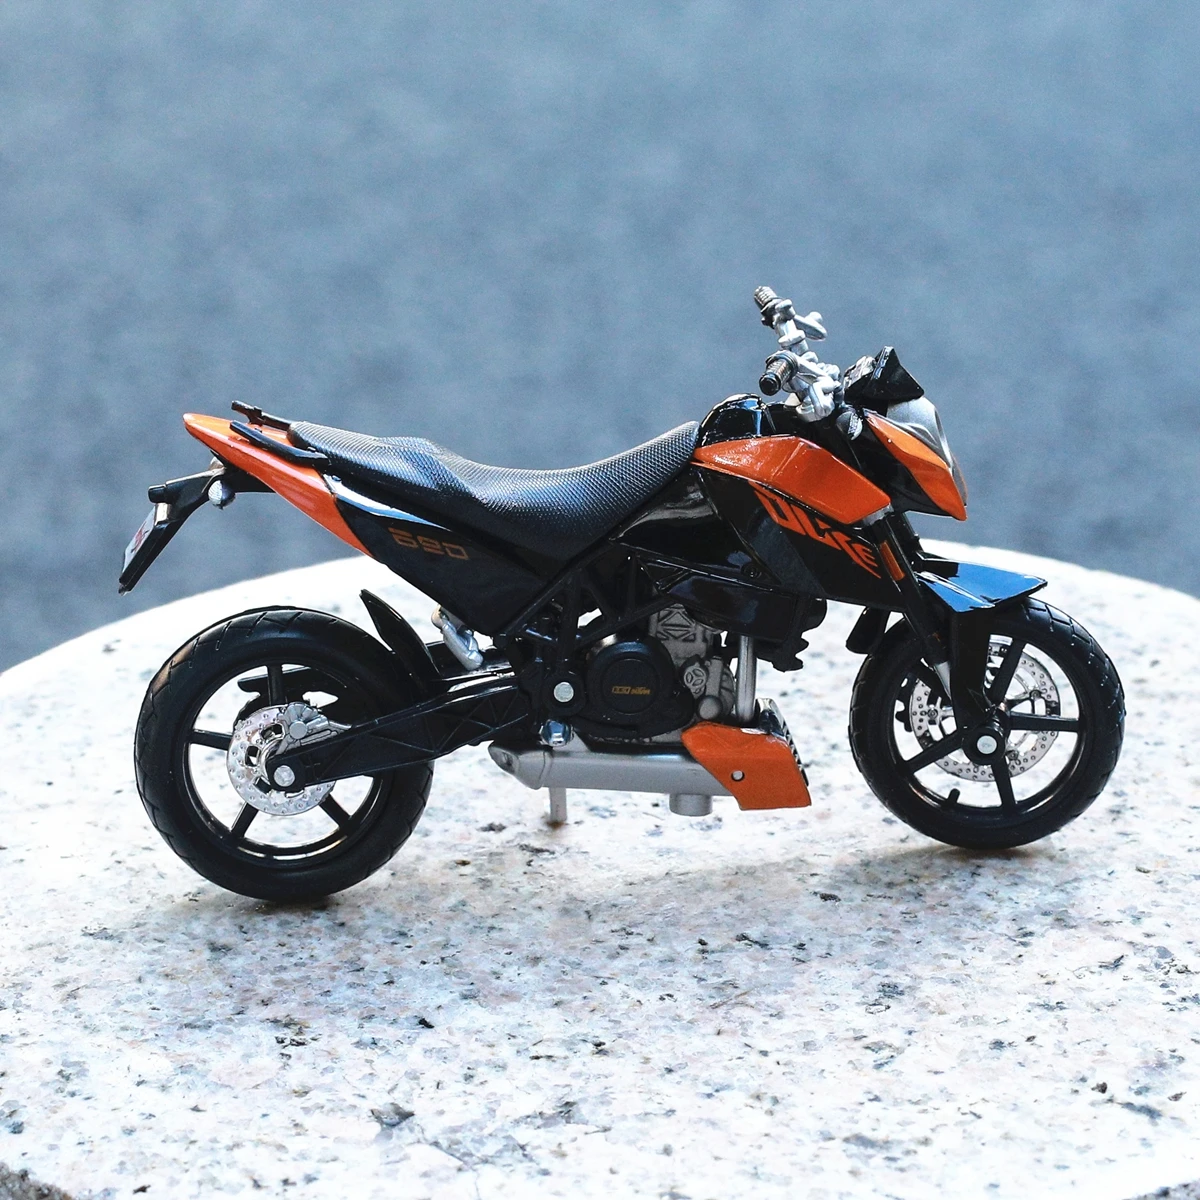 

Maisto 1:18 KTM 690 DUKE Alloy Motorcycle Model Souvenir Toy Collectible Mini Moto Die Cast